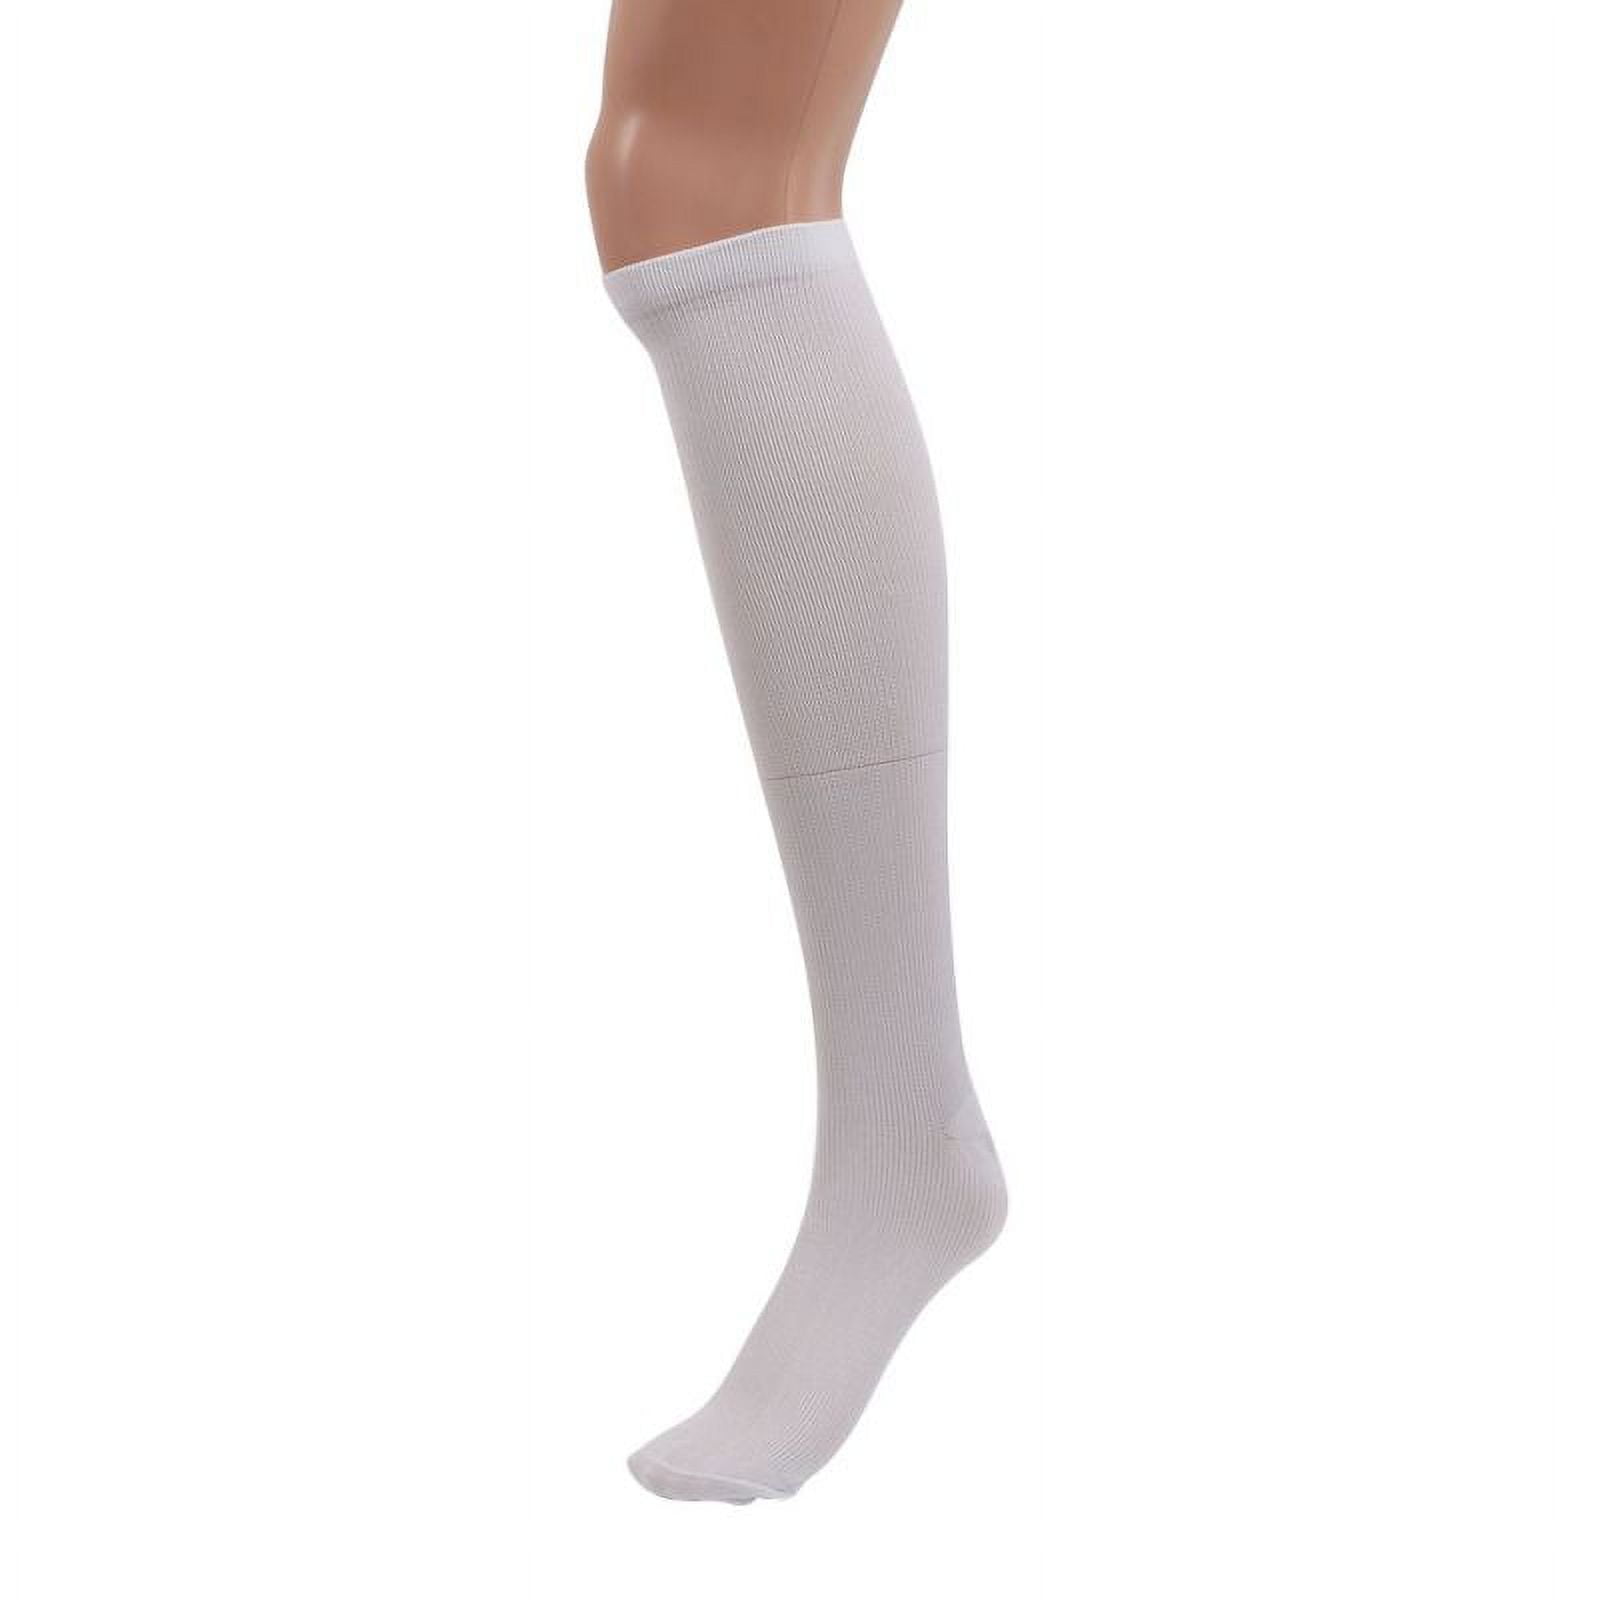 1 Pair Knee High Graduated Compression Socks for Men & Women